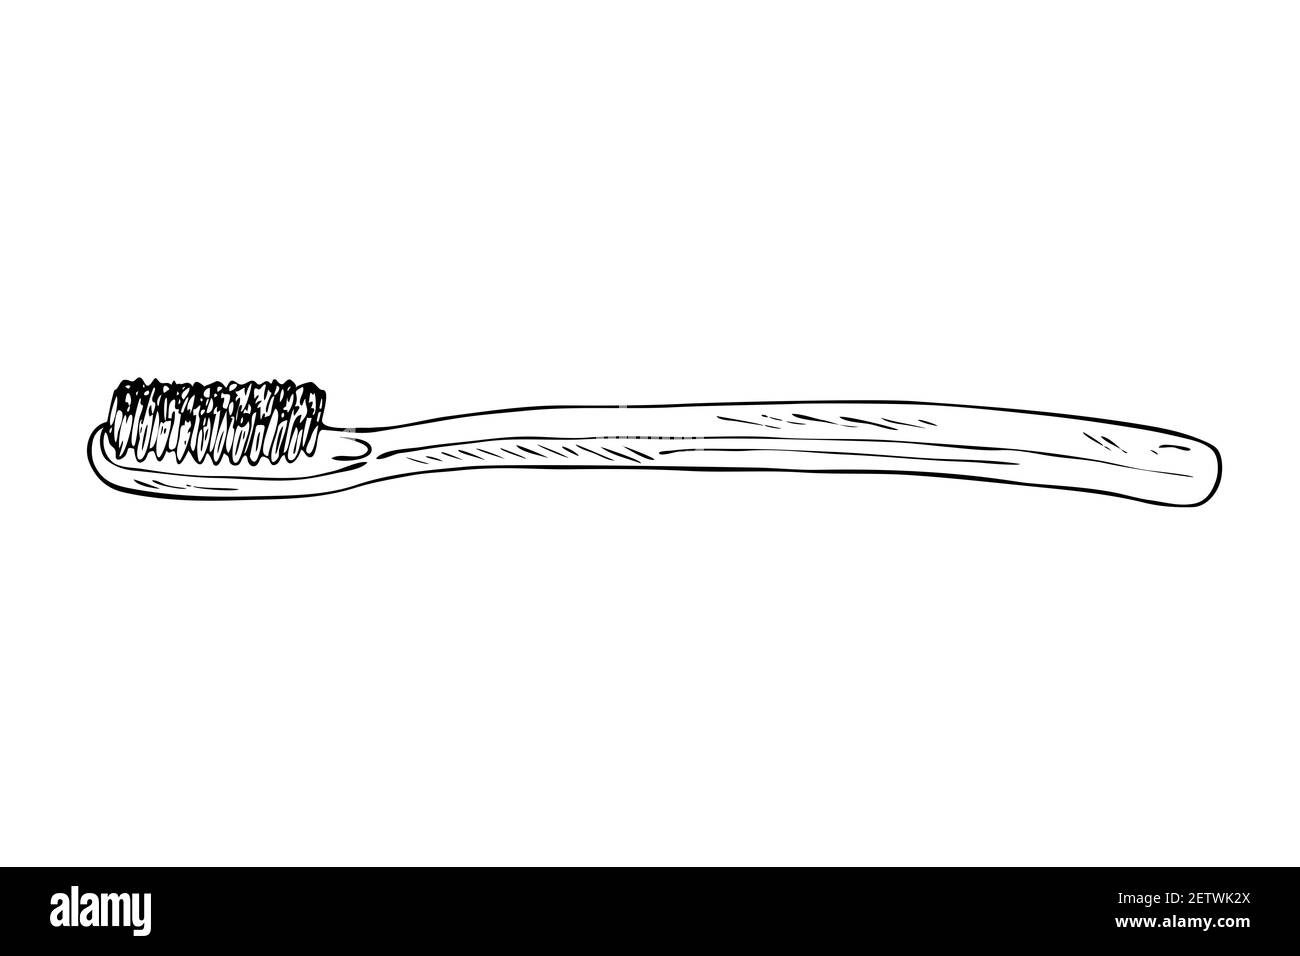 Zahnbürste, handgezeichnete Doodle-Skizze, isolierte Illustration  Stockfotografie - Alamy